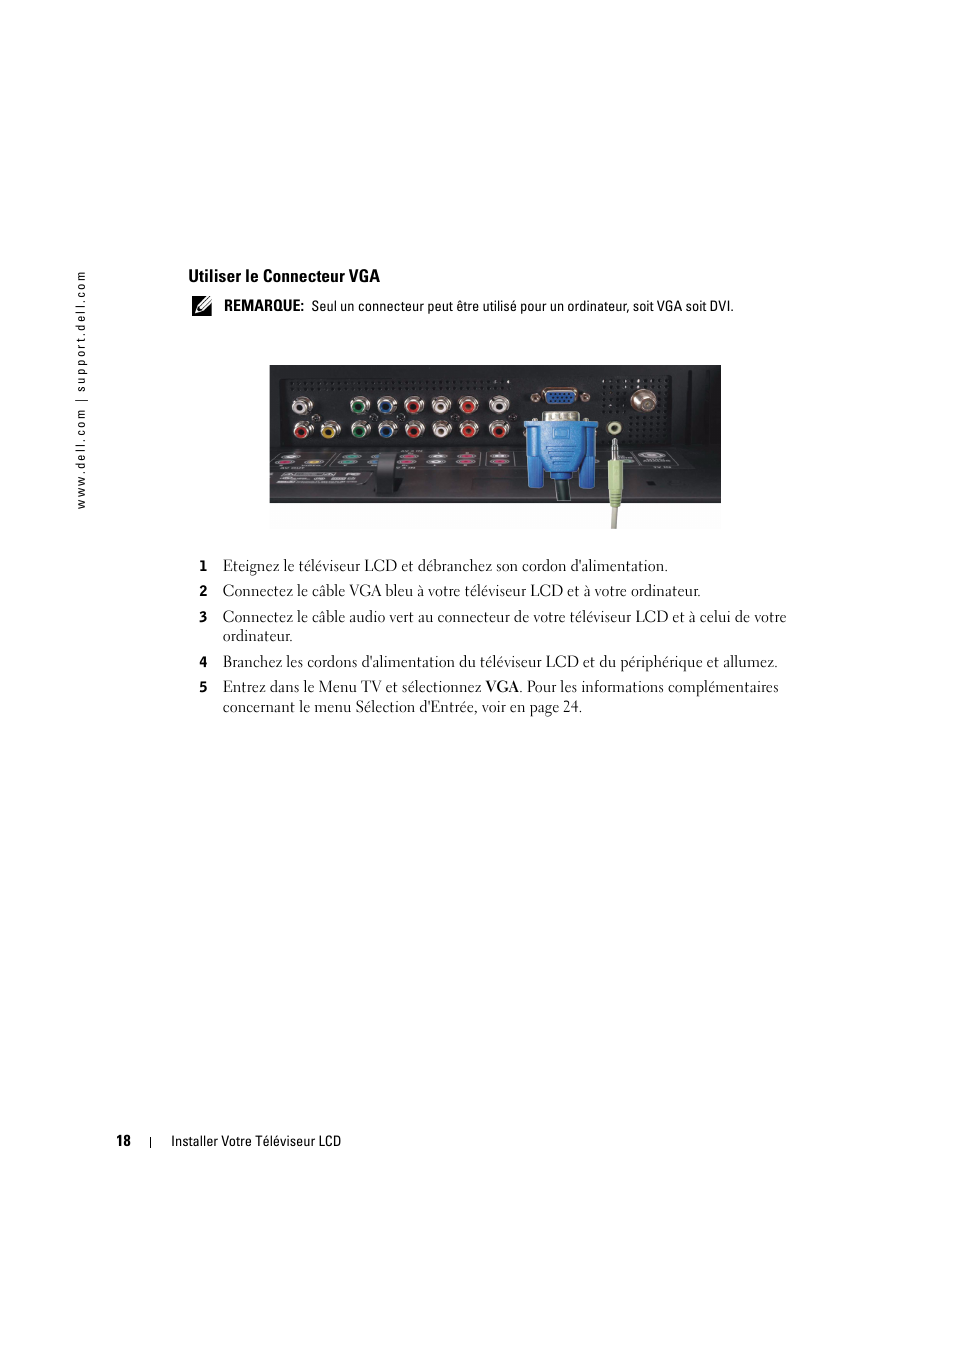 Dell LCD TV W2606C Manuel d'utilisation | Page 18 / 60